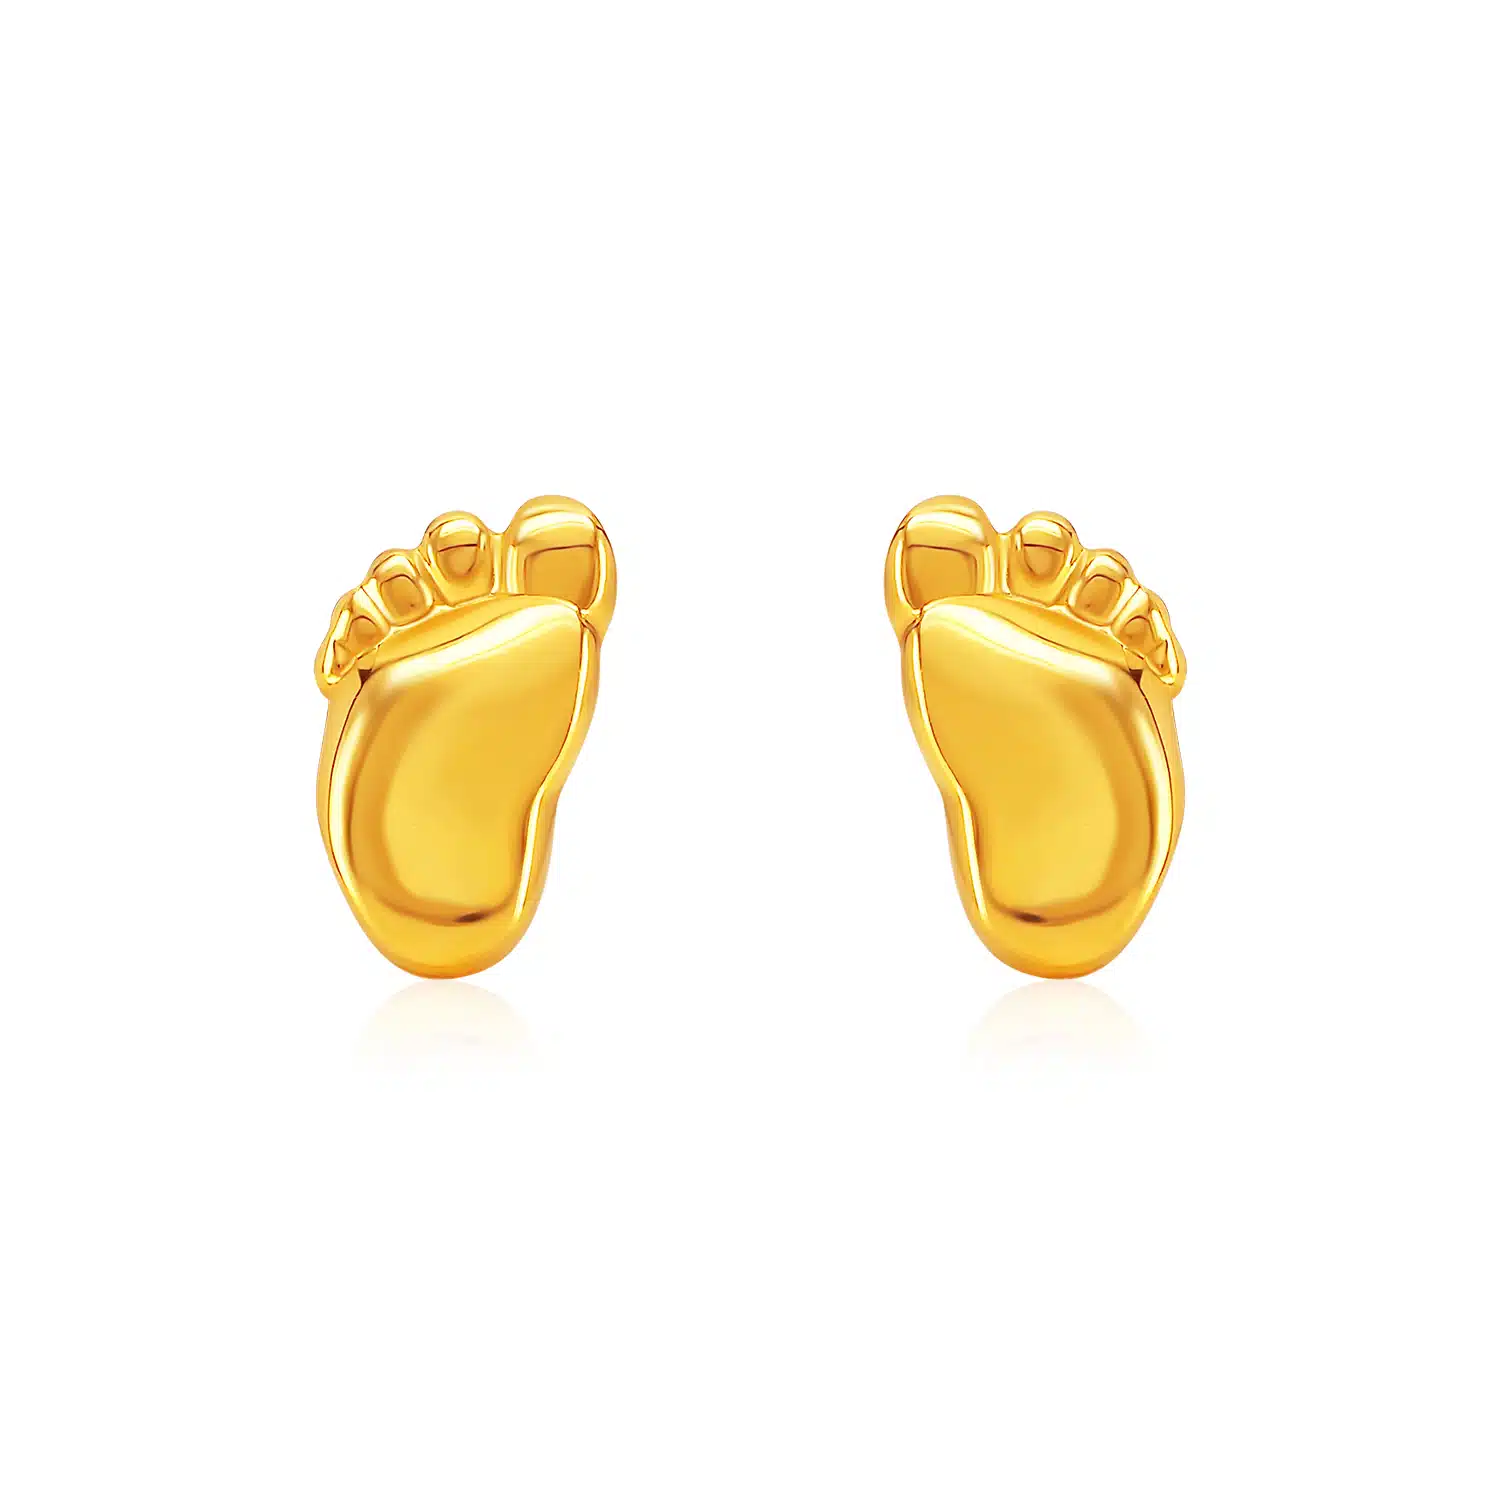 Baby feet earrings gold enameled | online sales on HOLYART.com